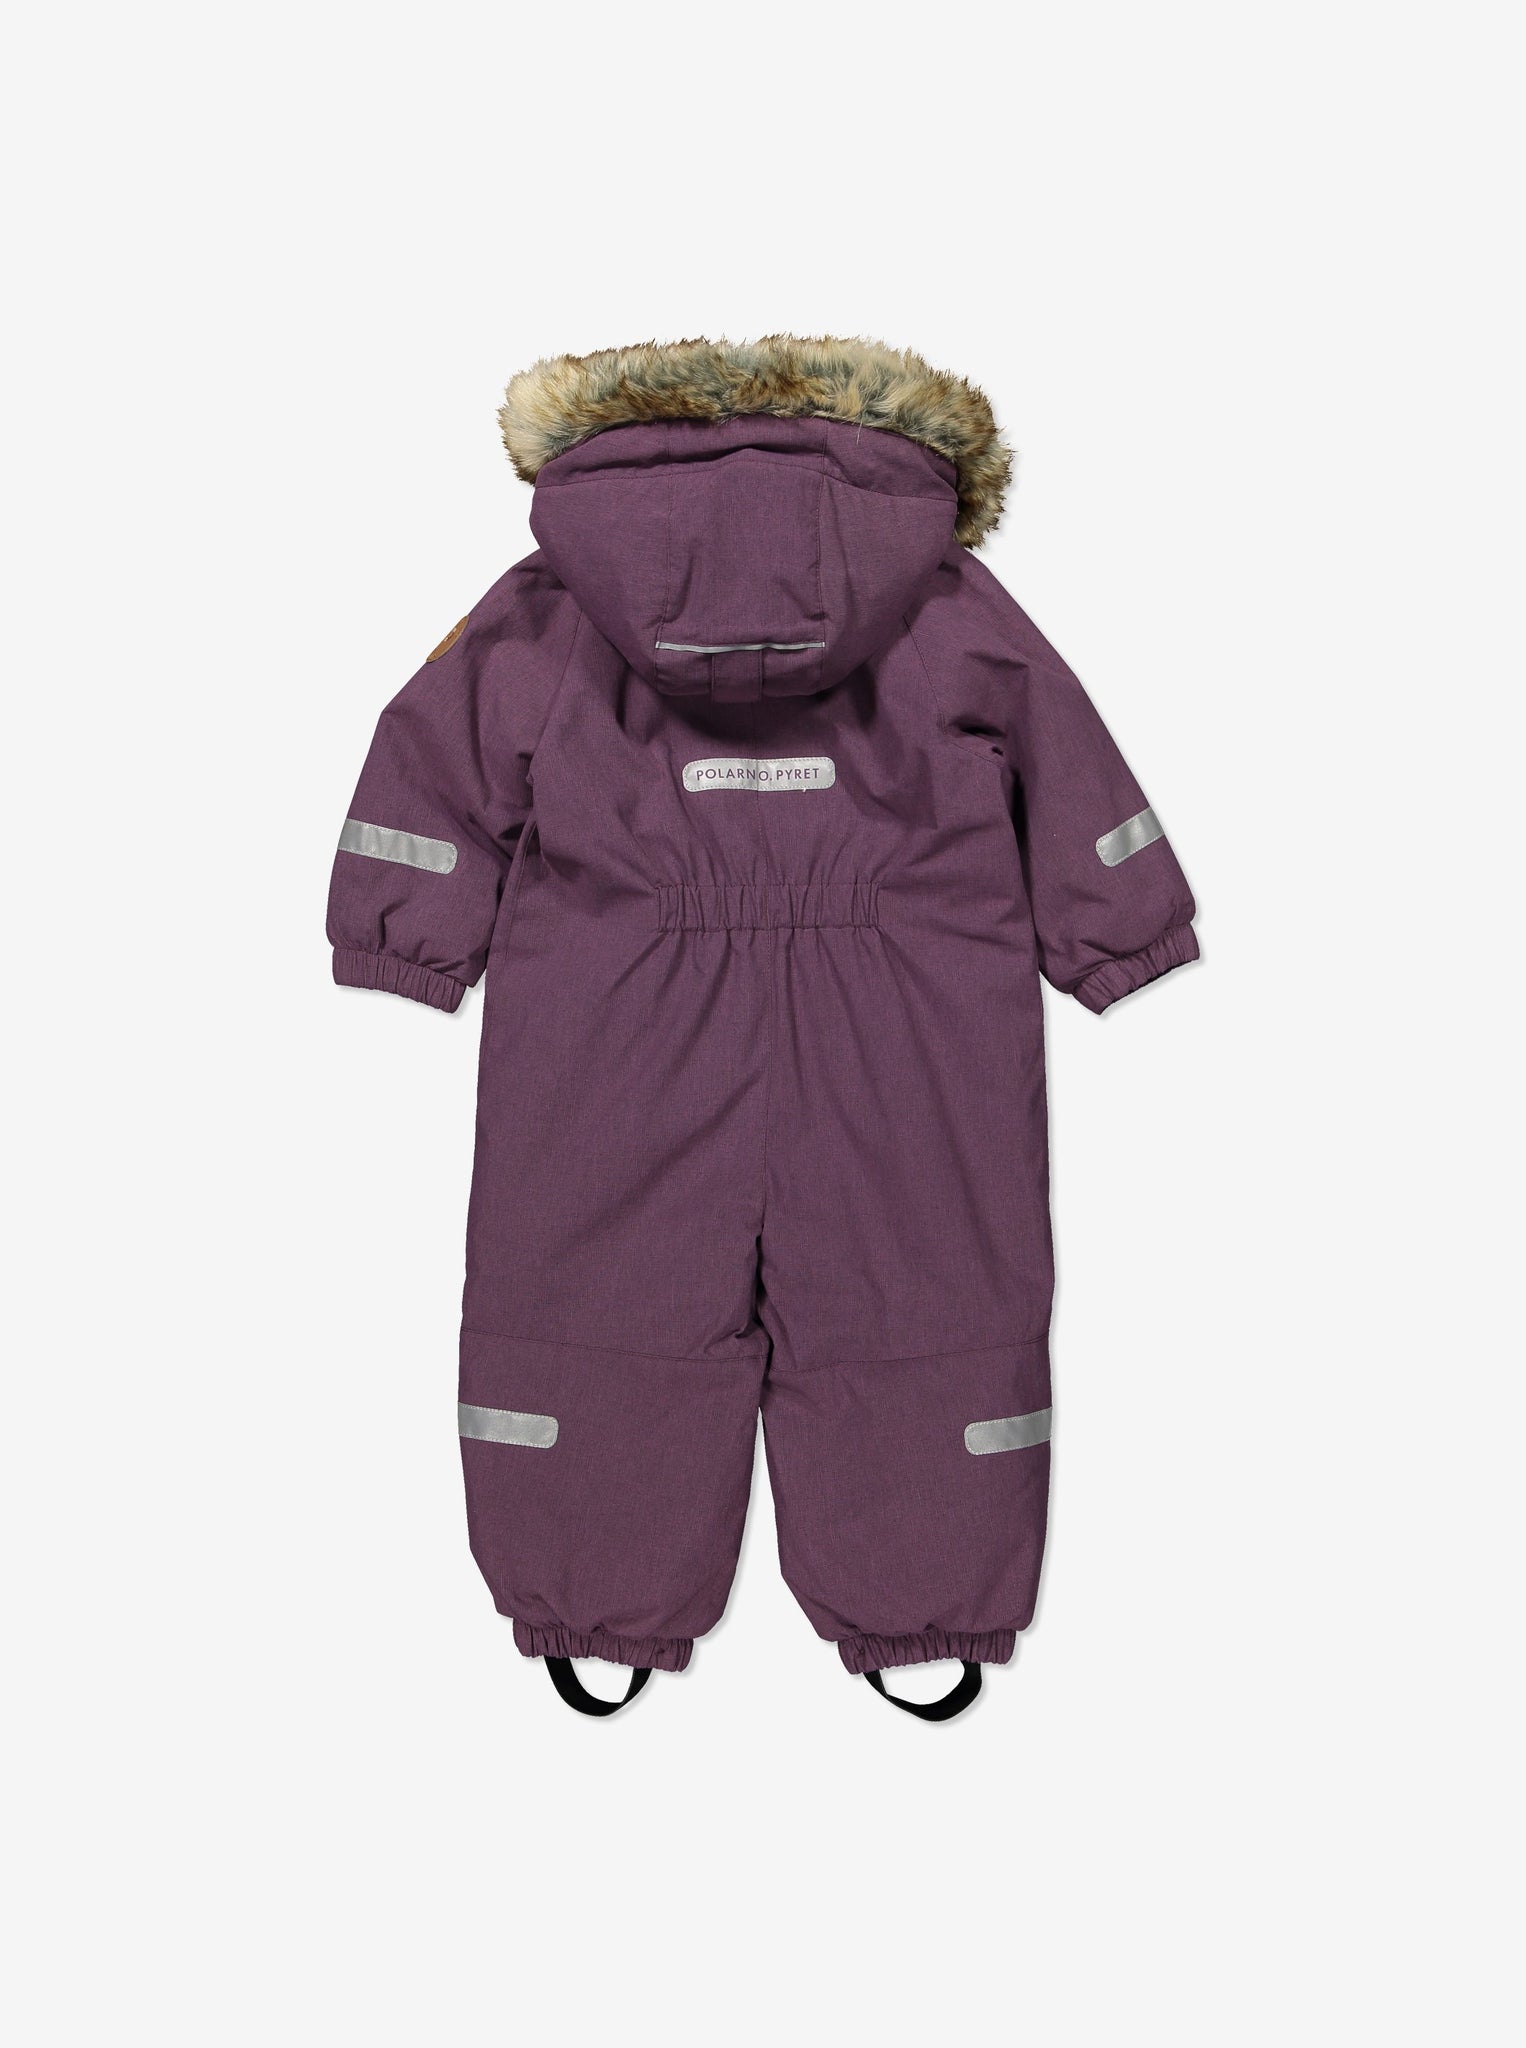 Baby Waterproof Padded Winter Overall-9m-2y-Purple-Girl